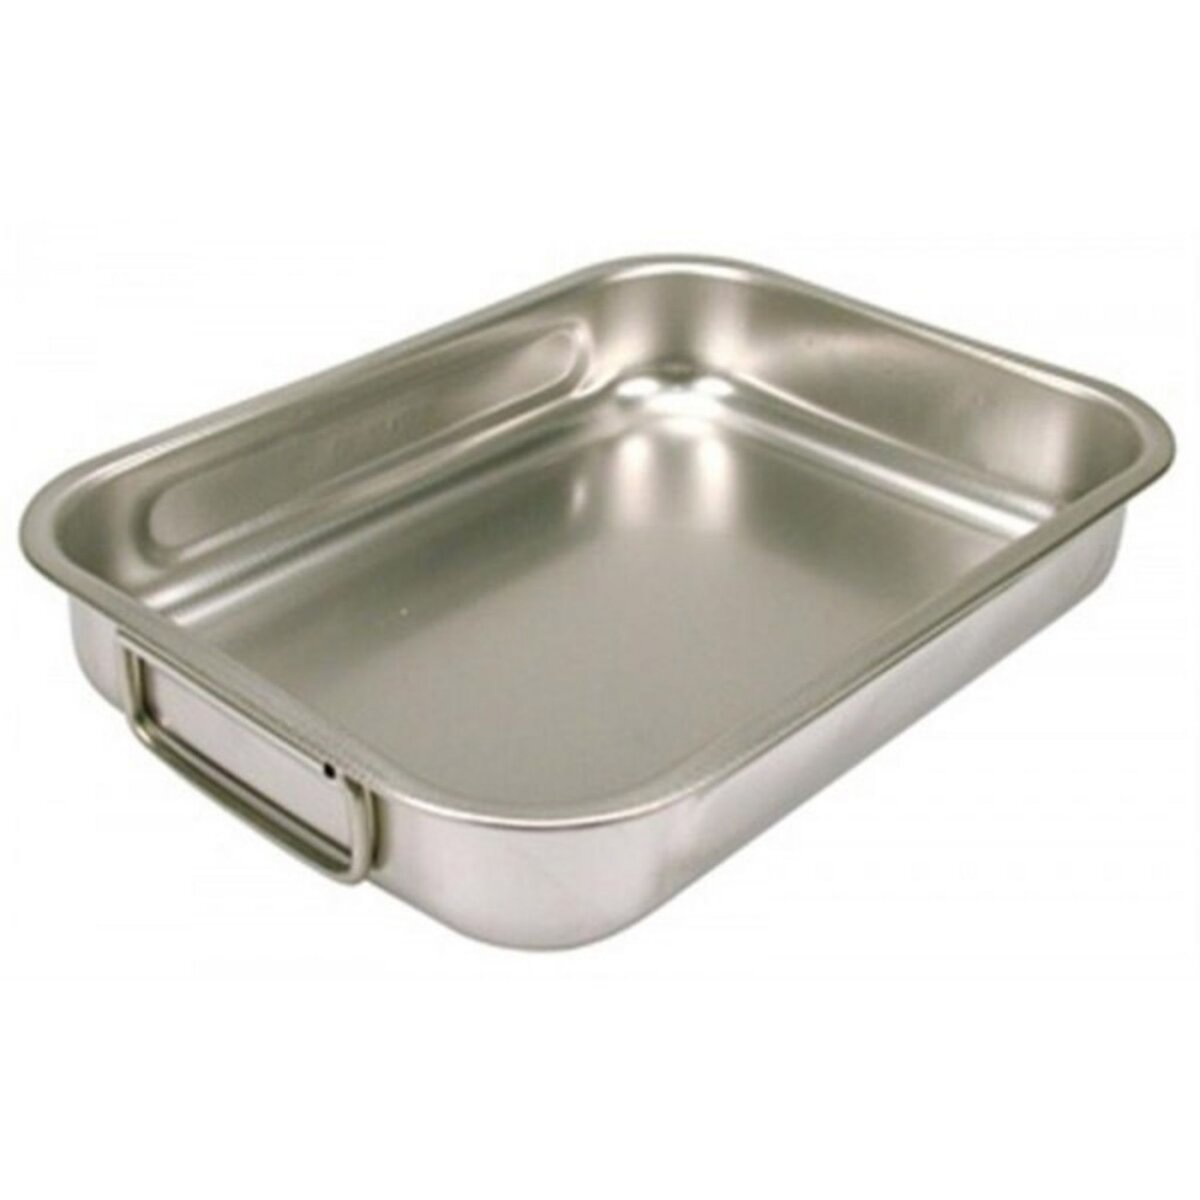 Steel pan Plat à four inox 40x28cm - 10183